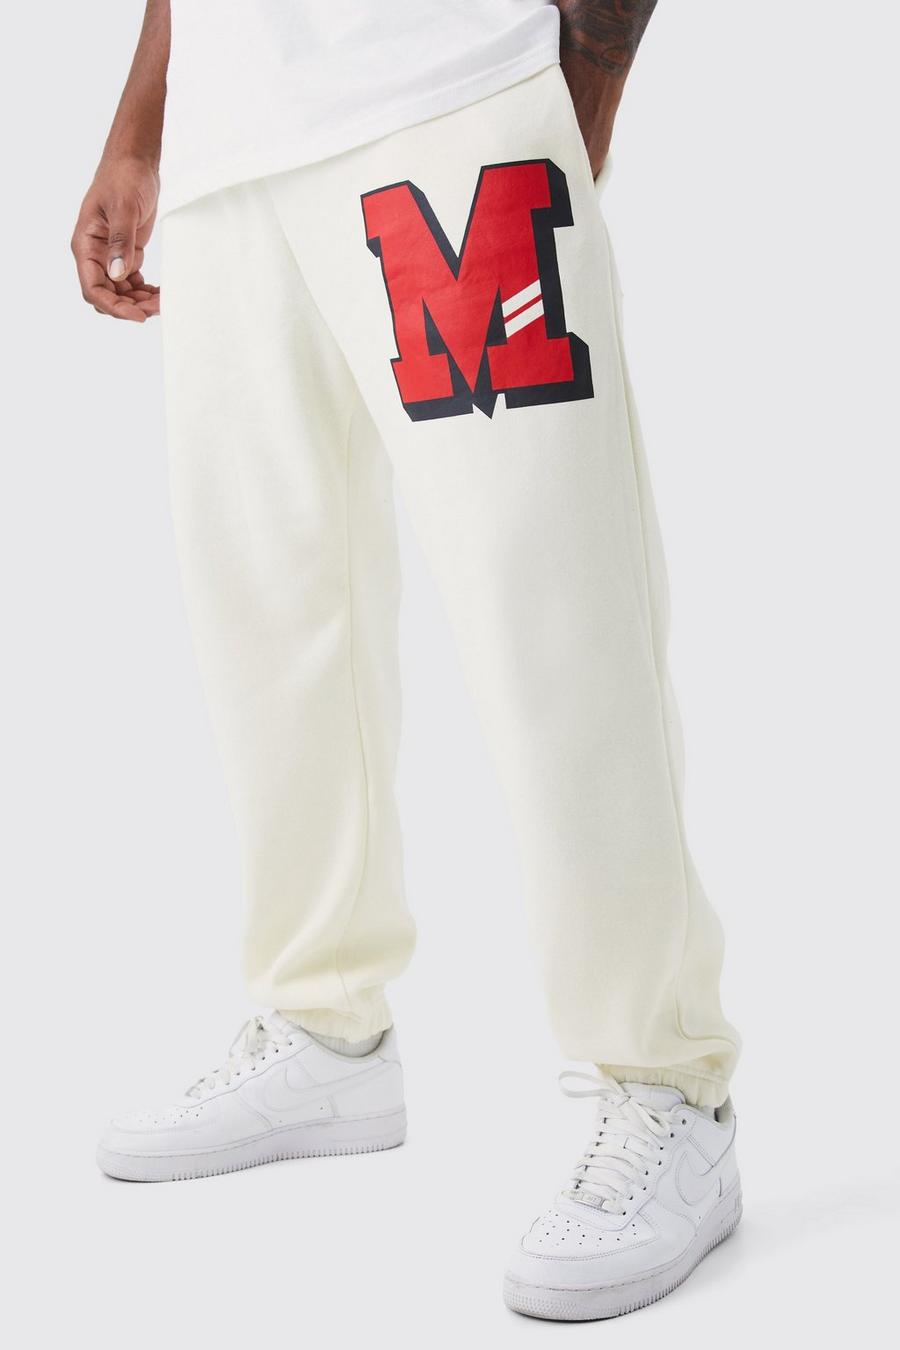 Pantaloni tuta Plus Size stile Varsity con grafica M, Ecru blanco